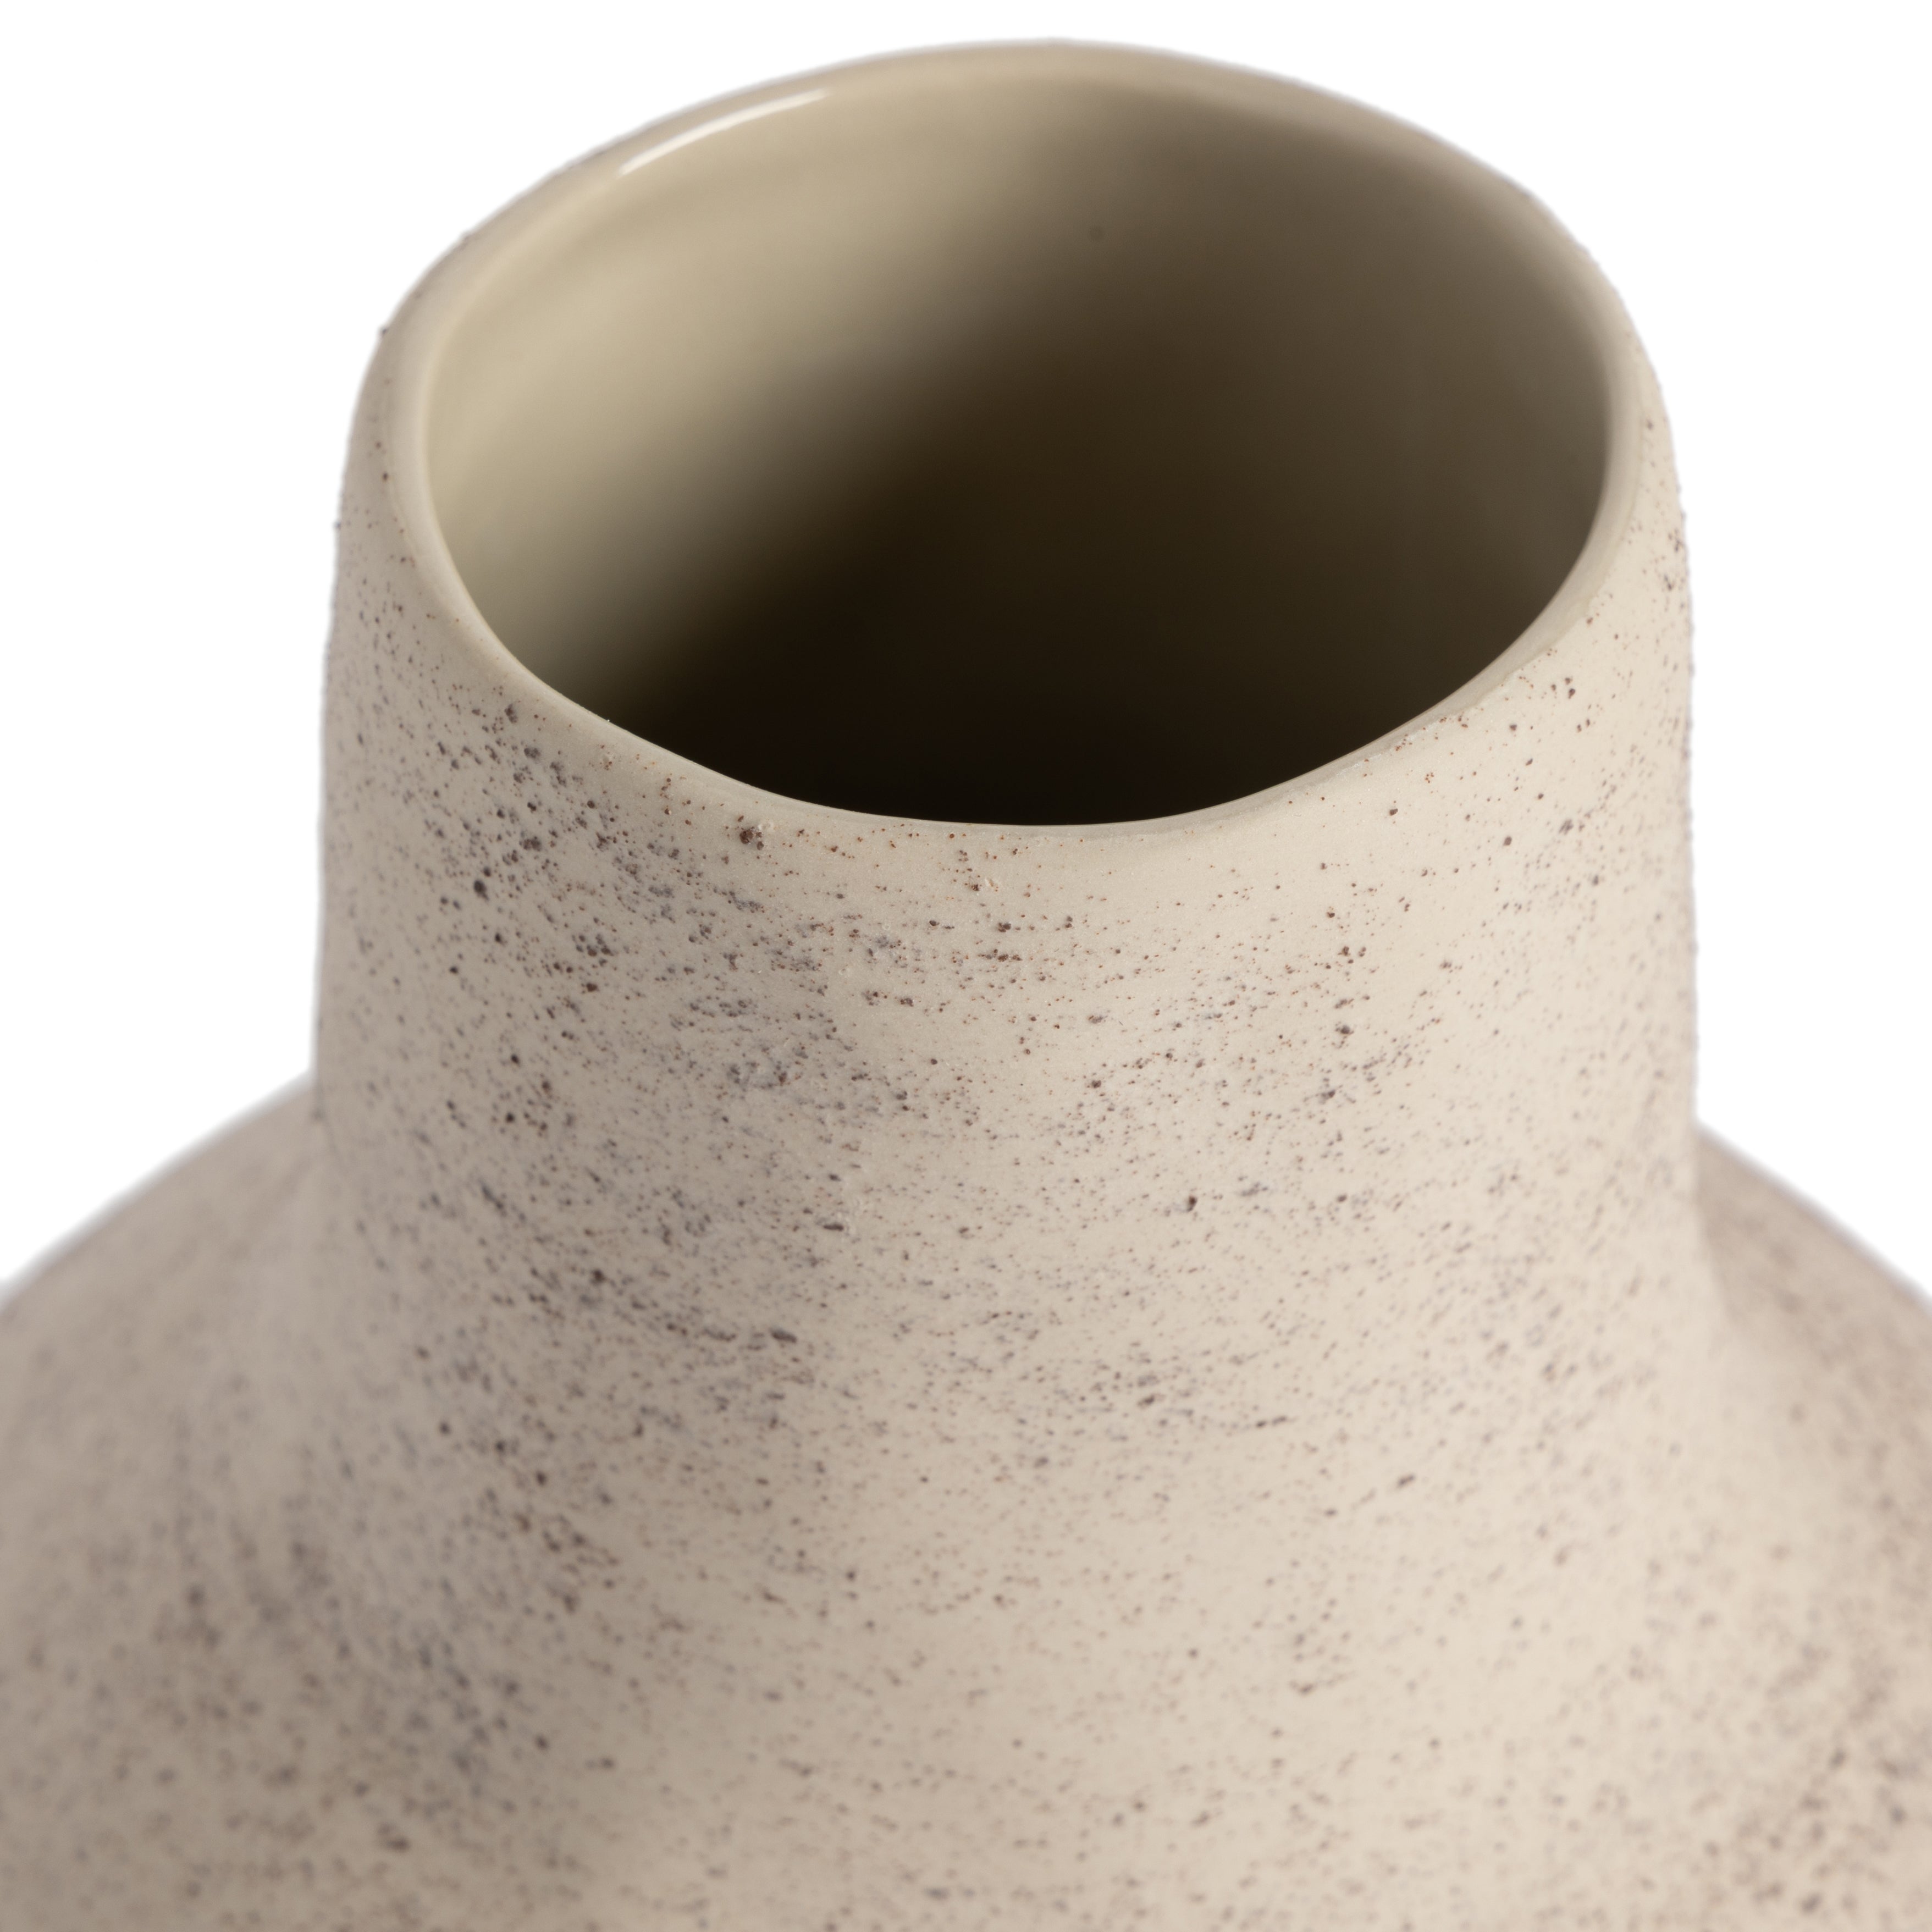 Arid Round Vase-Distressed Cream - StyleMeGHD - 